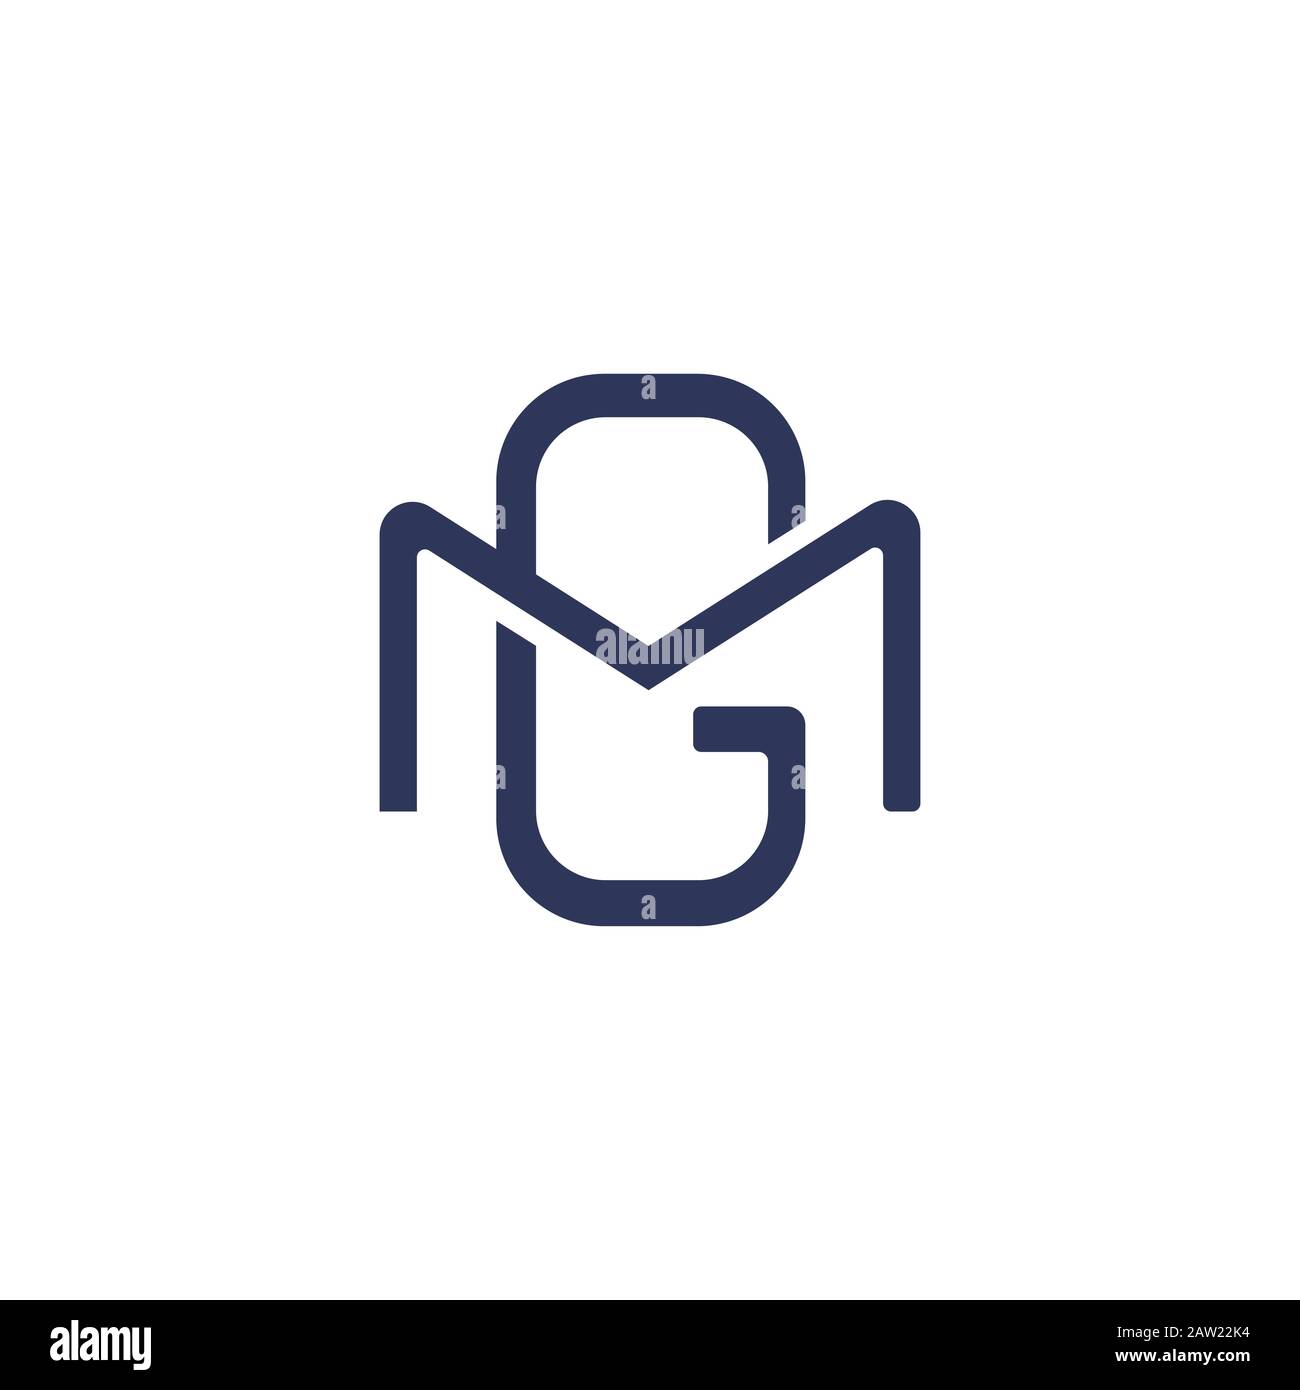 Initial letter gm logo or mg logo vector design template, Stock